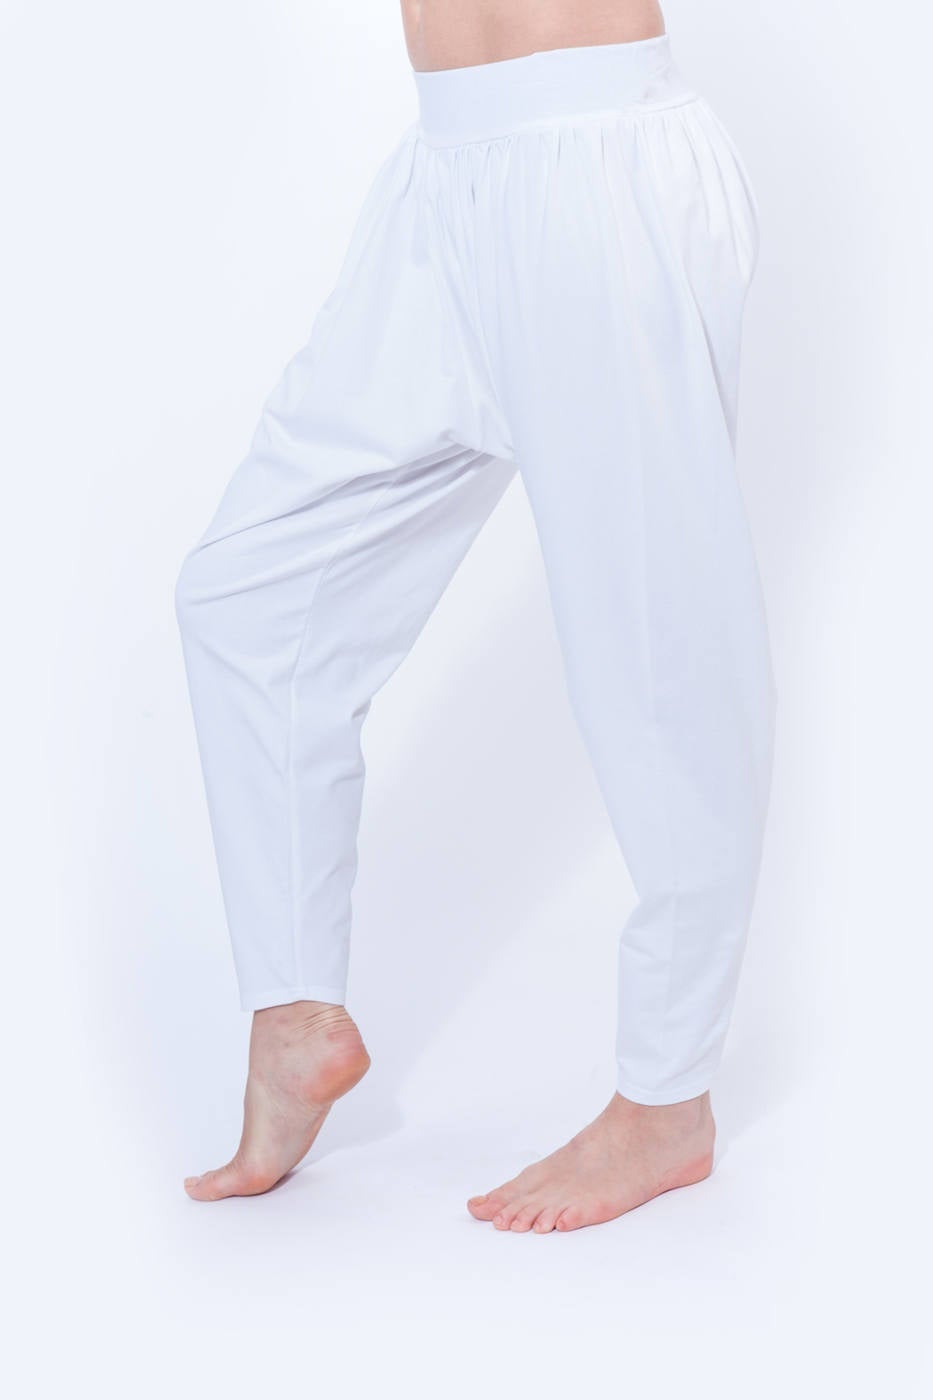 Cotton White Harem Pants, Kundalini Yoga White Pants, Glorka